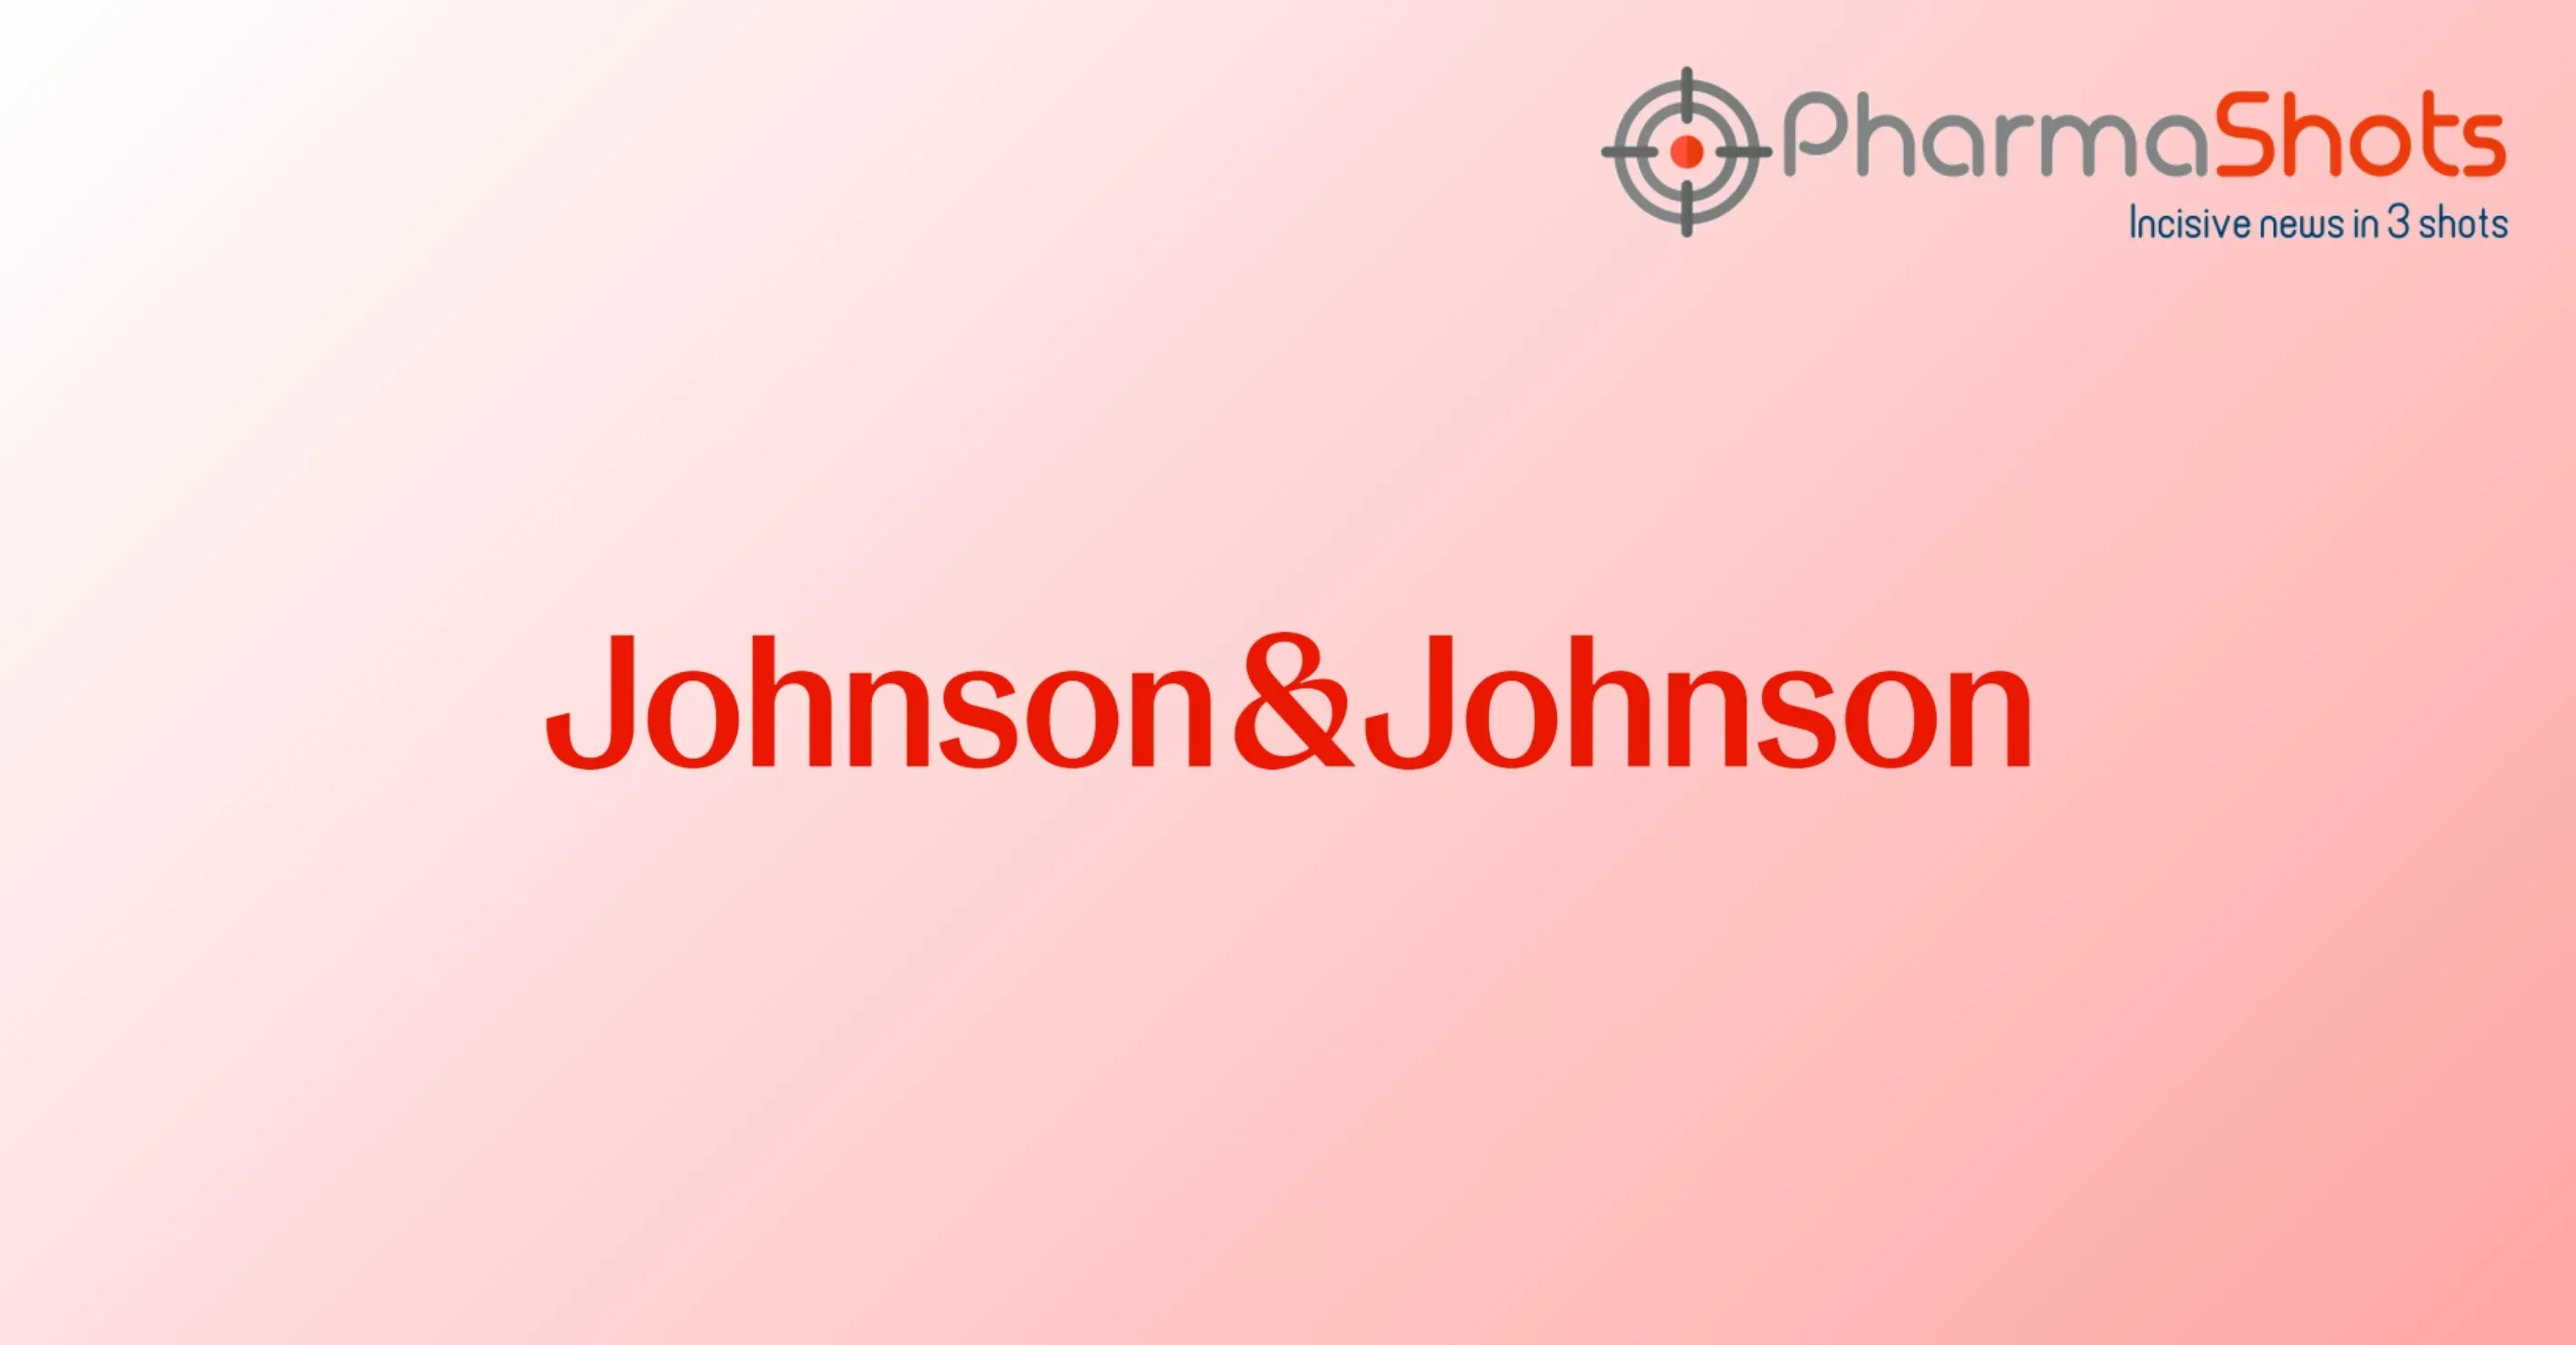 Johnson & Johnson to Expand its Dermatology Portfolio Through the Acquisition of Proteologix